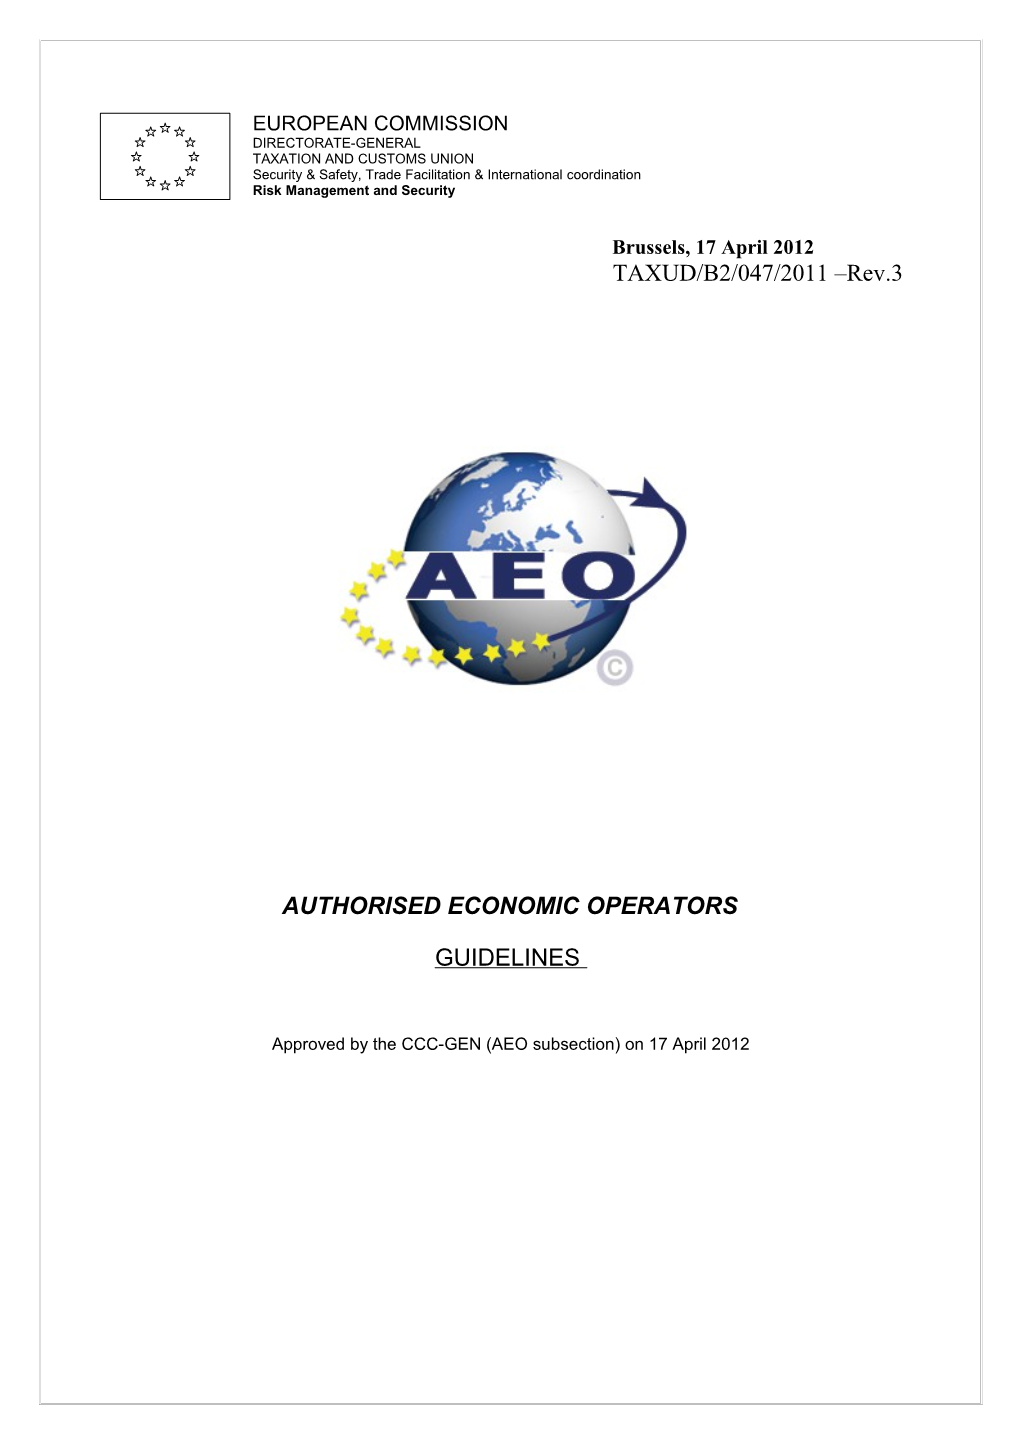 Authorised Economic Operators